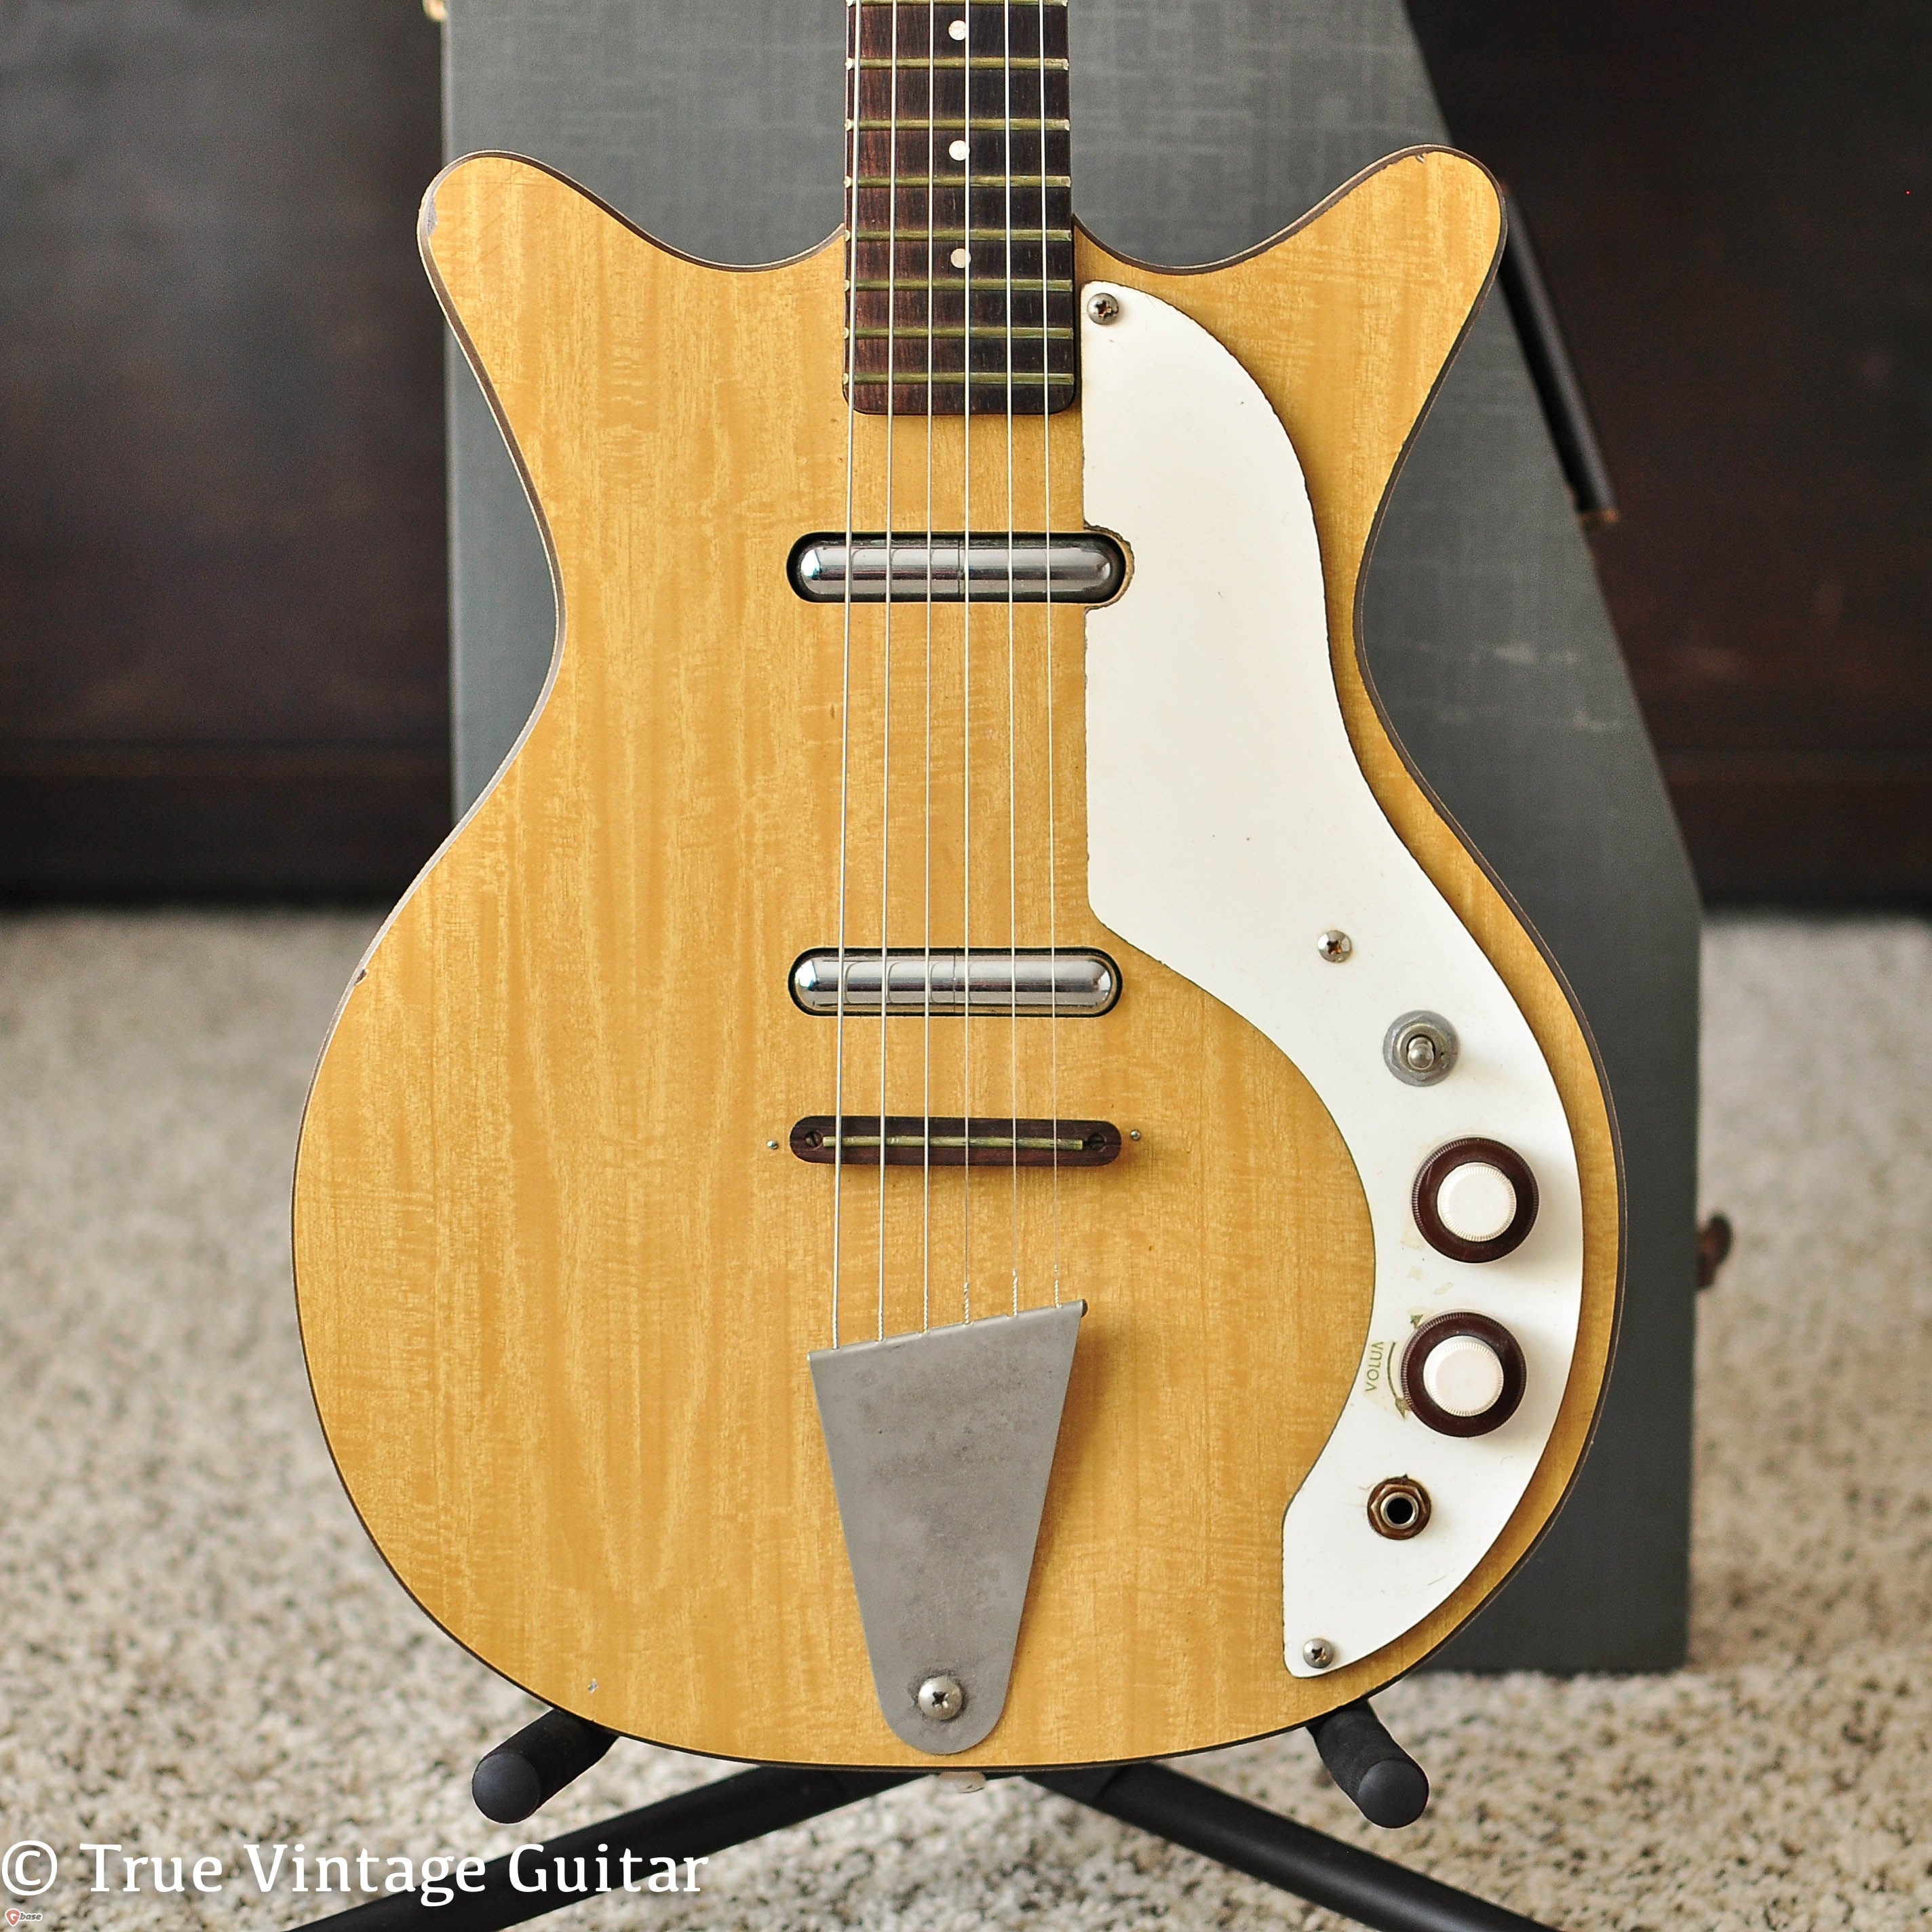 Vintage 1959 Danelectro Companion electric guitar